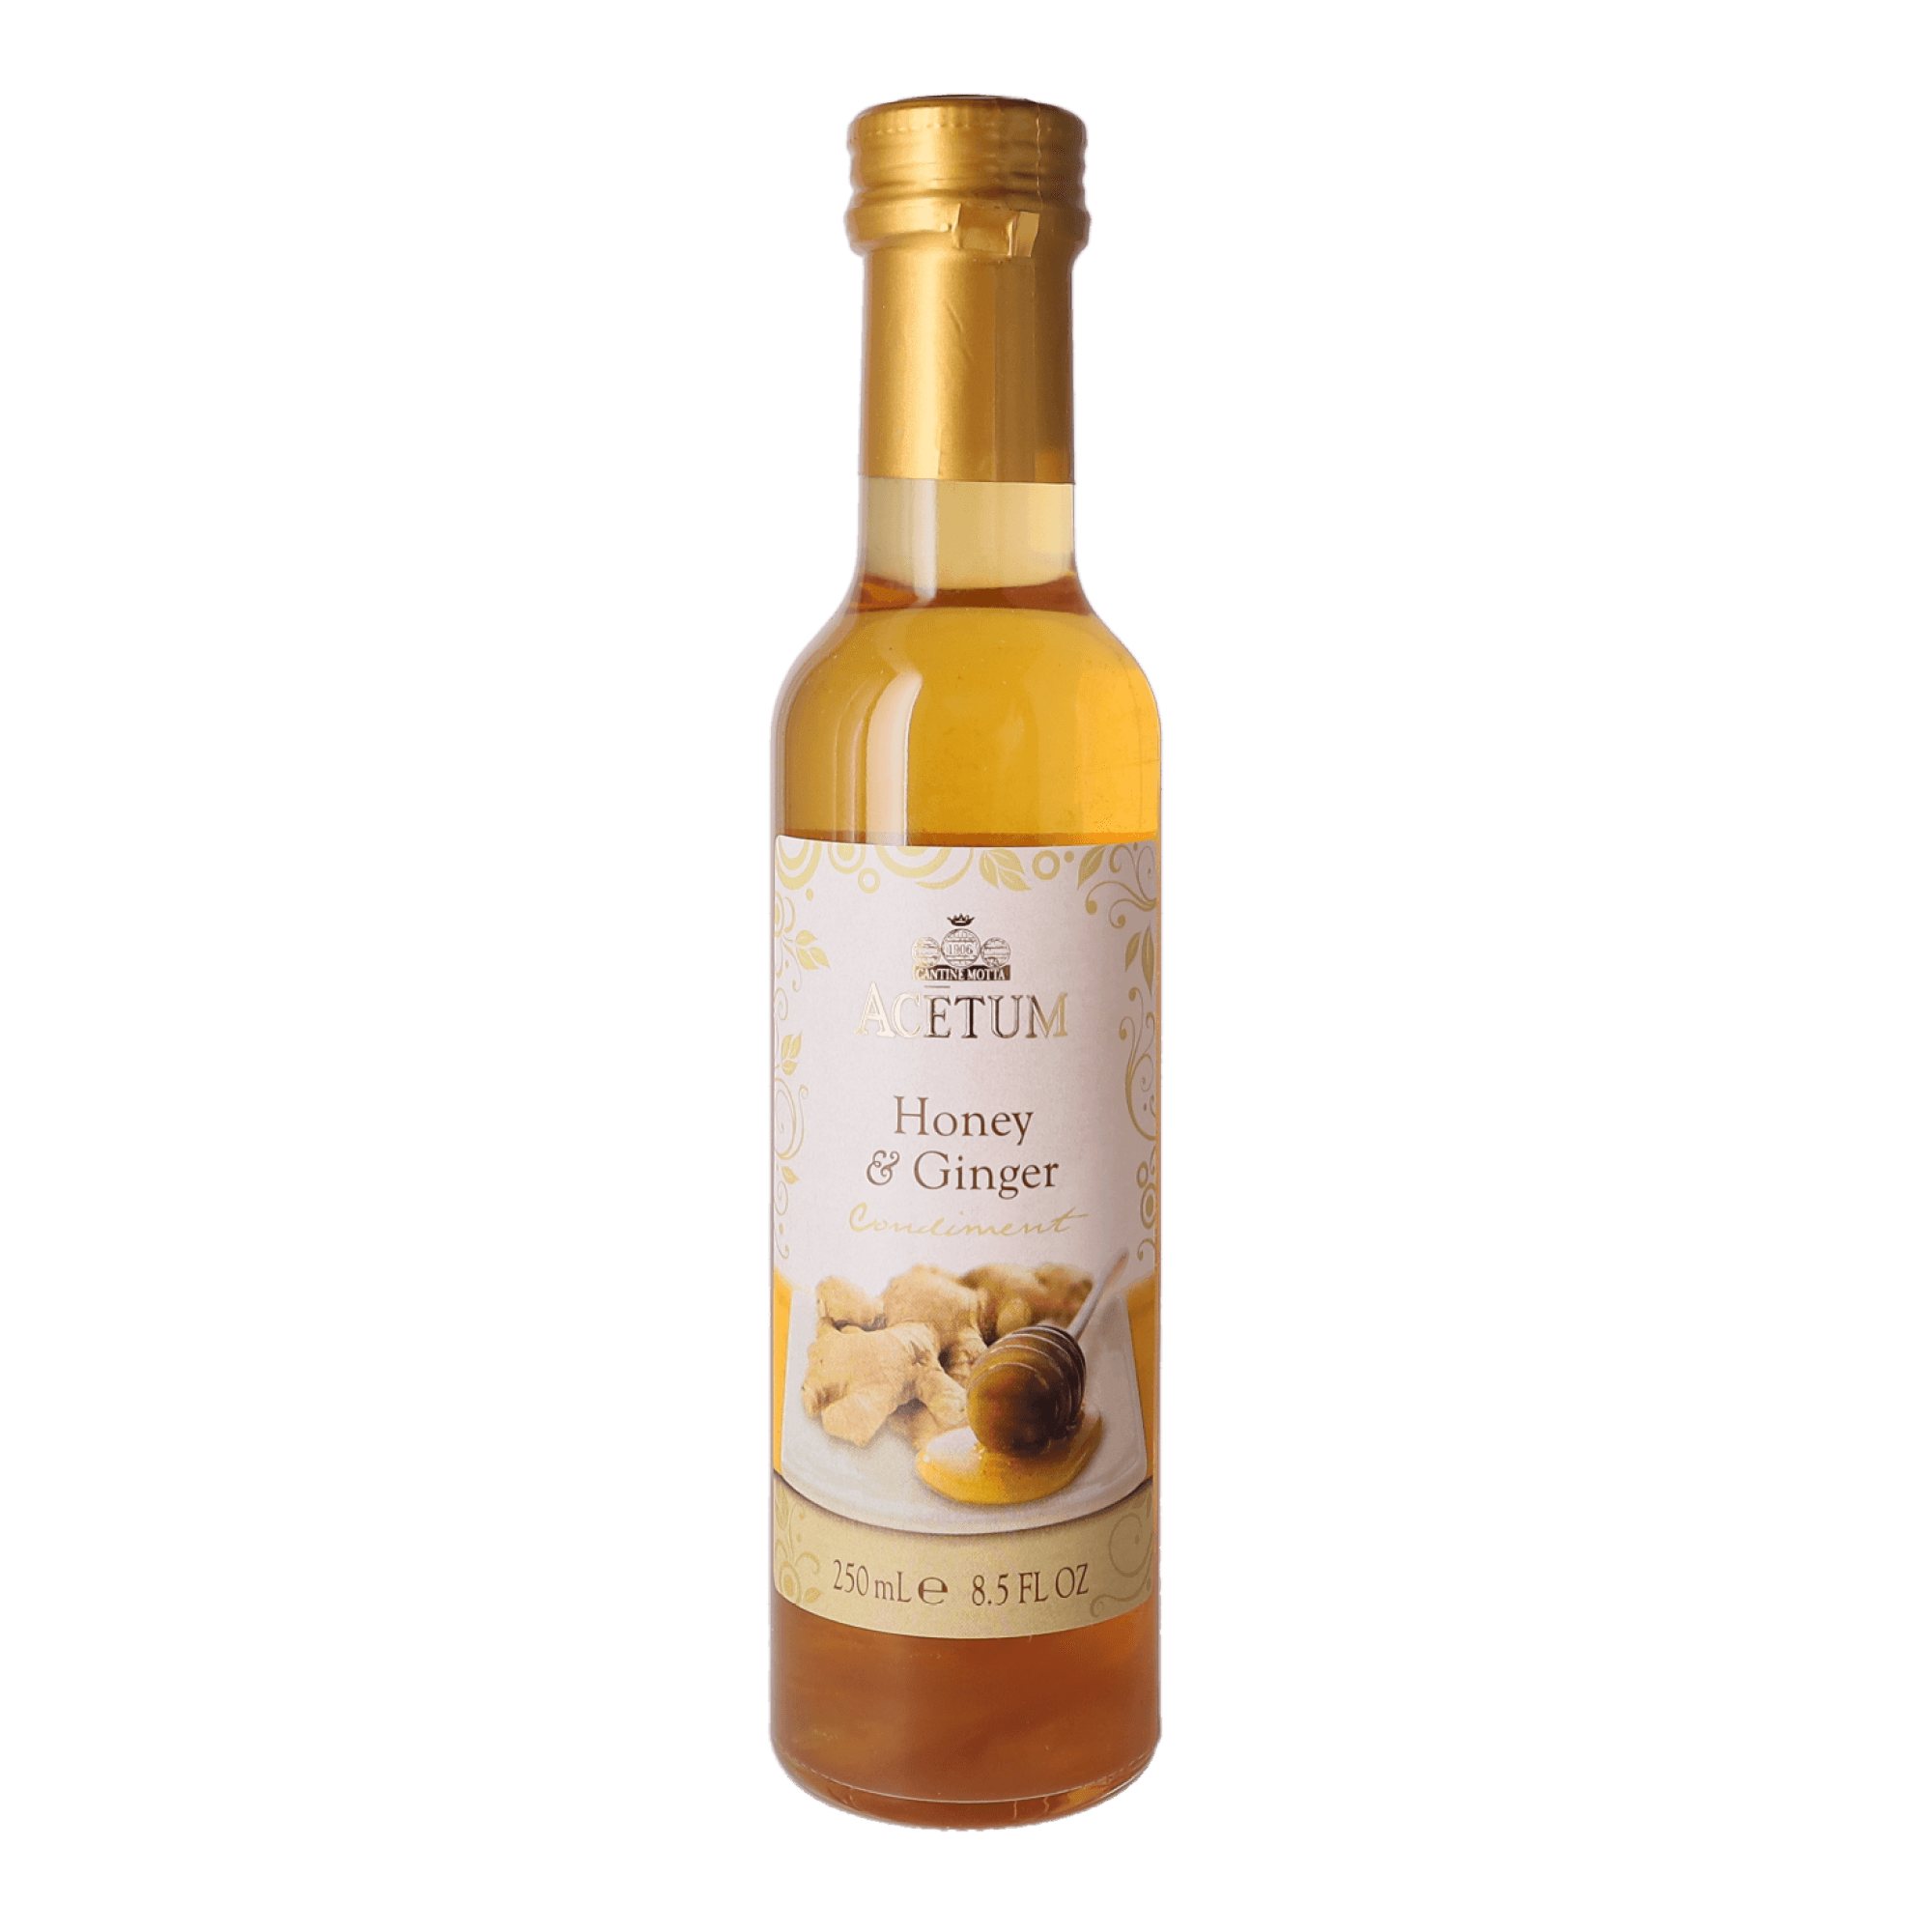 Honey & Ginger Condiment - Savory Gourmet